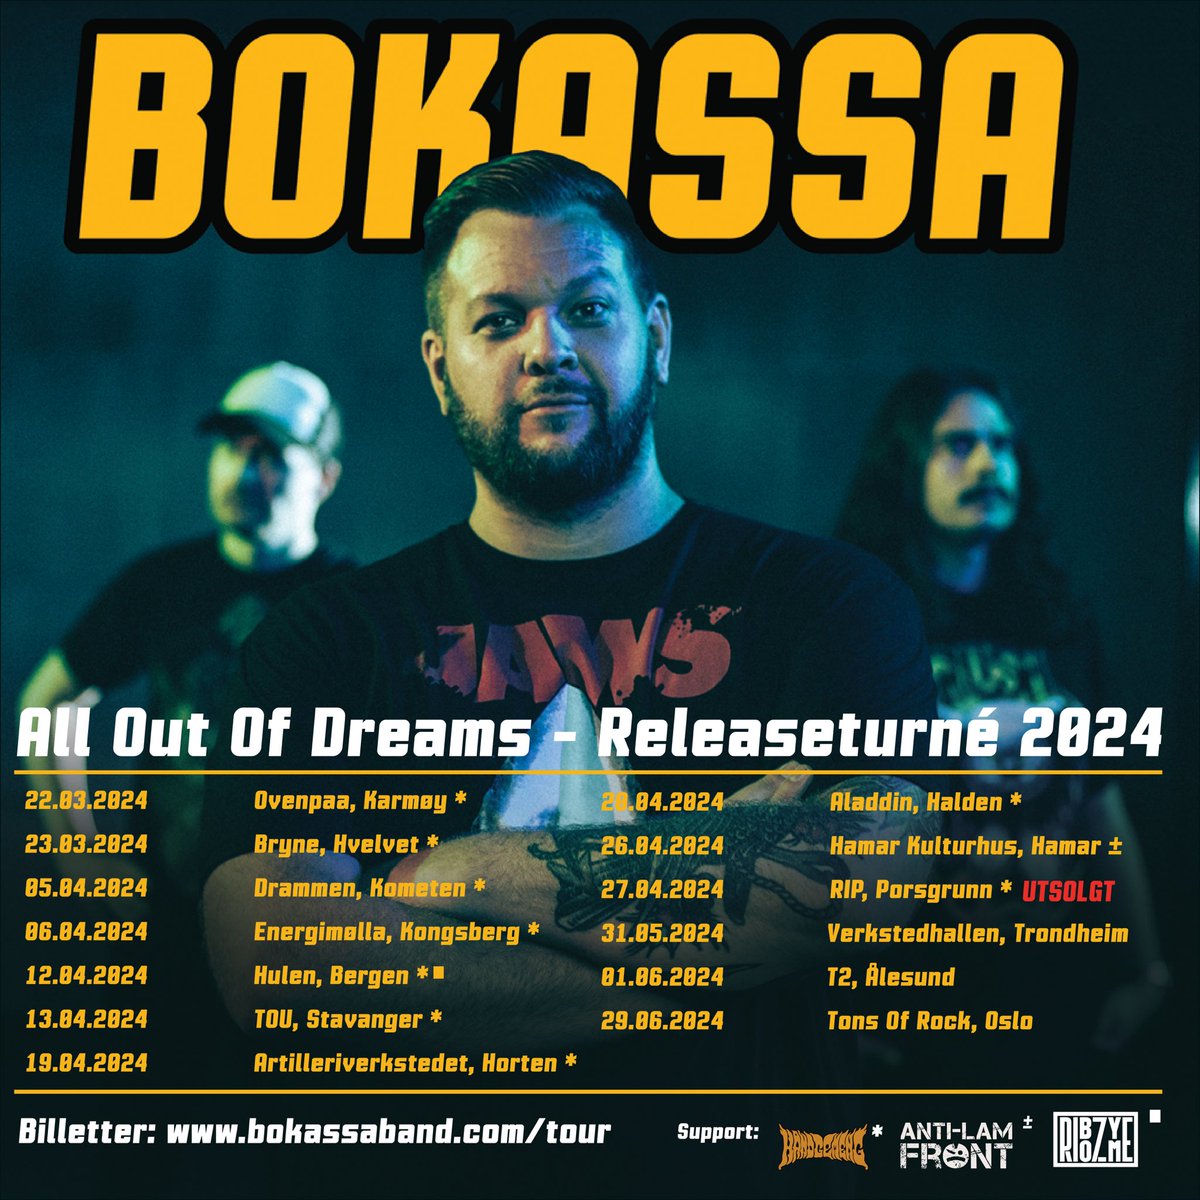 All Out of Dreams Tour 2024 Tickets: bokassaband.com/tour